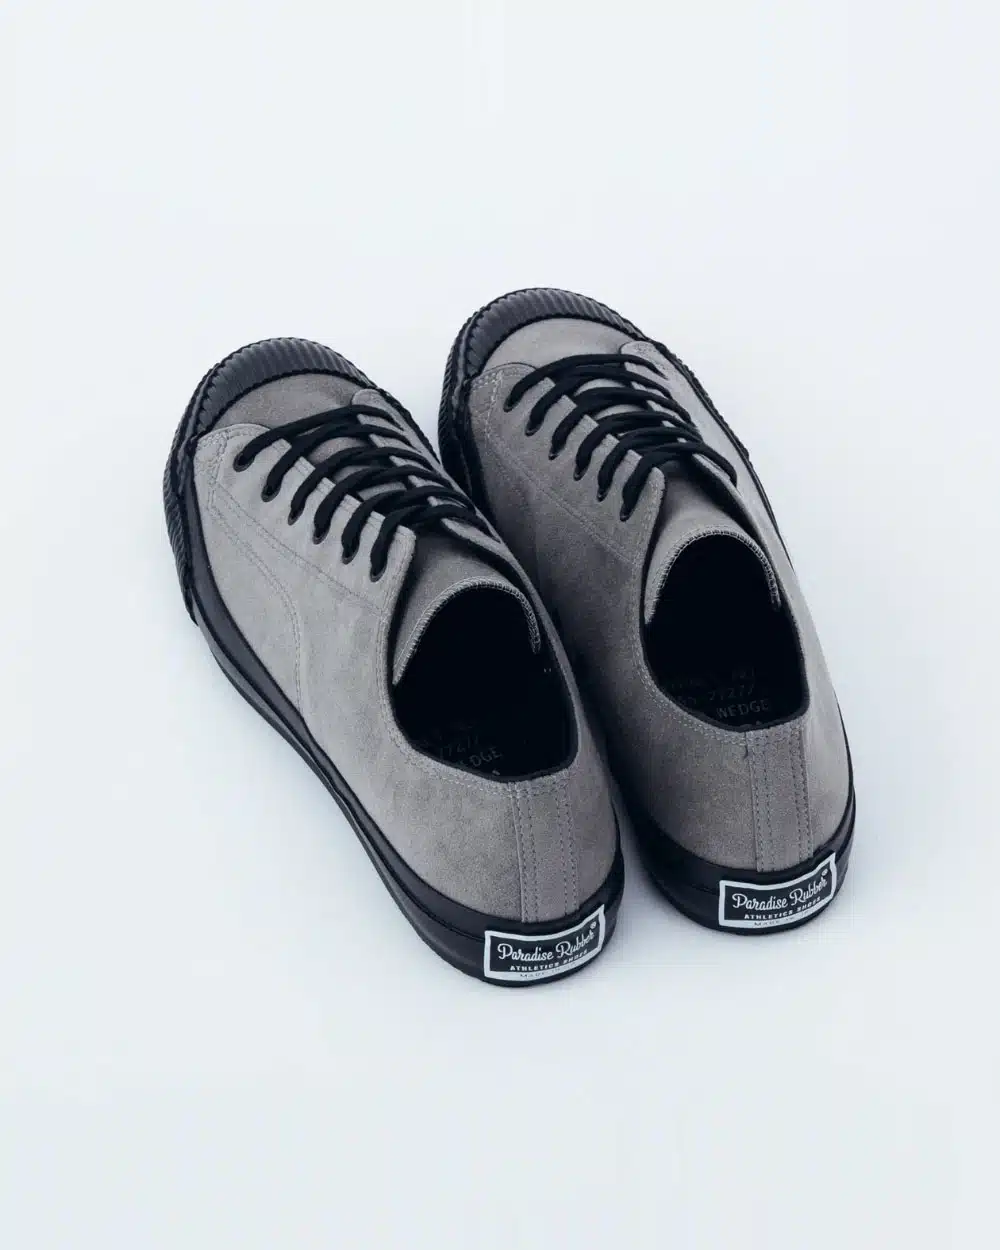 PRAS Shellcap Low Sneakers - Grey Vegan Suede/Black